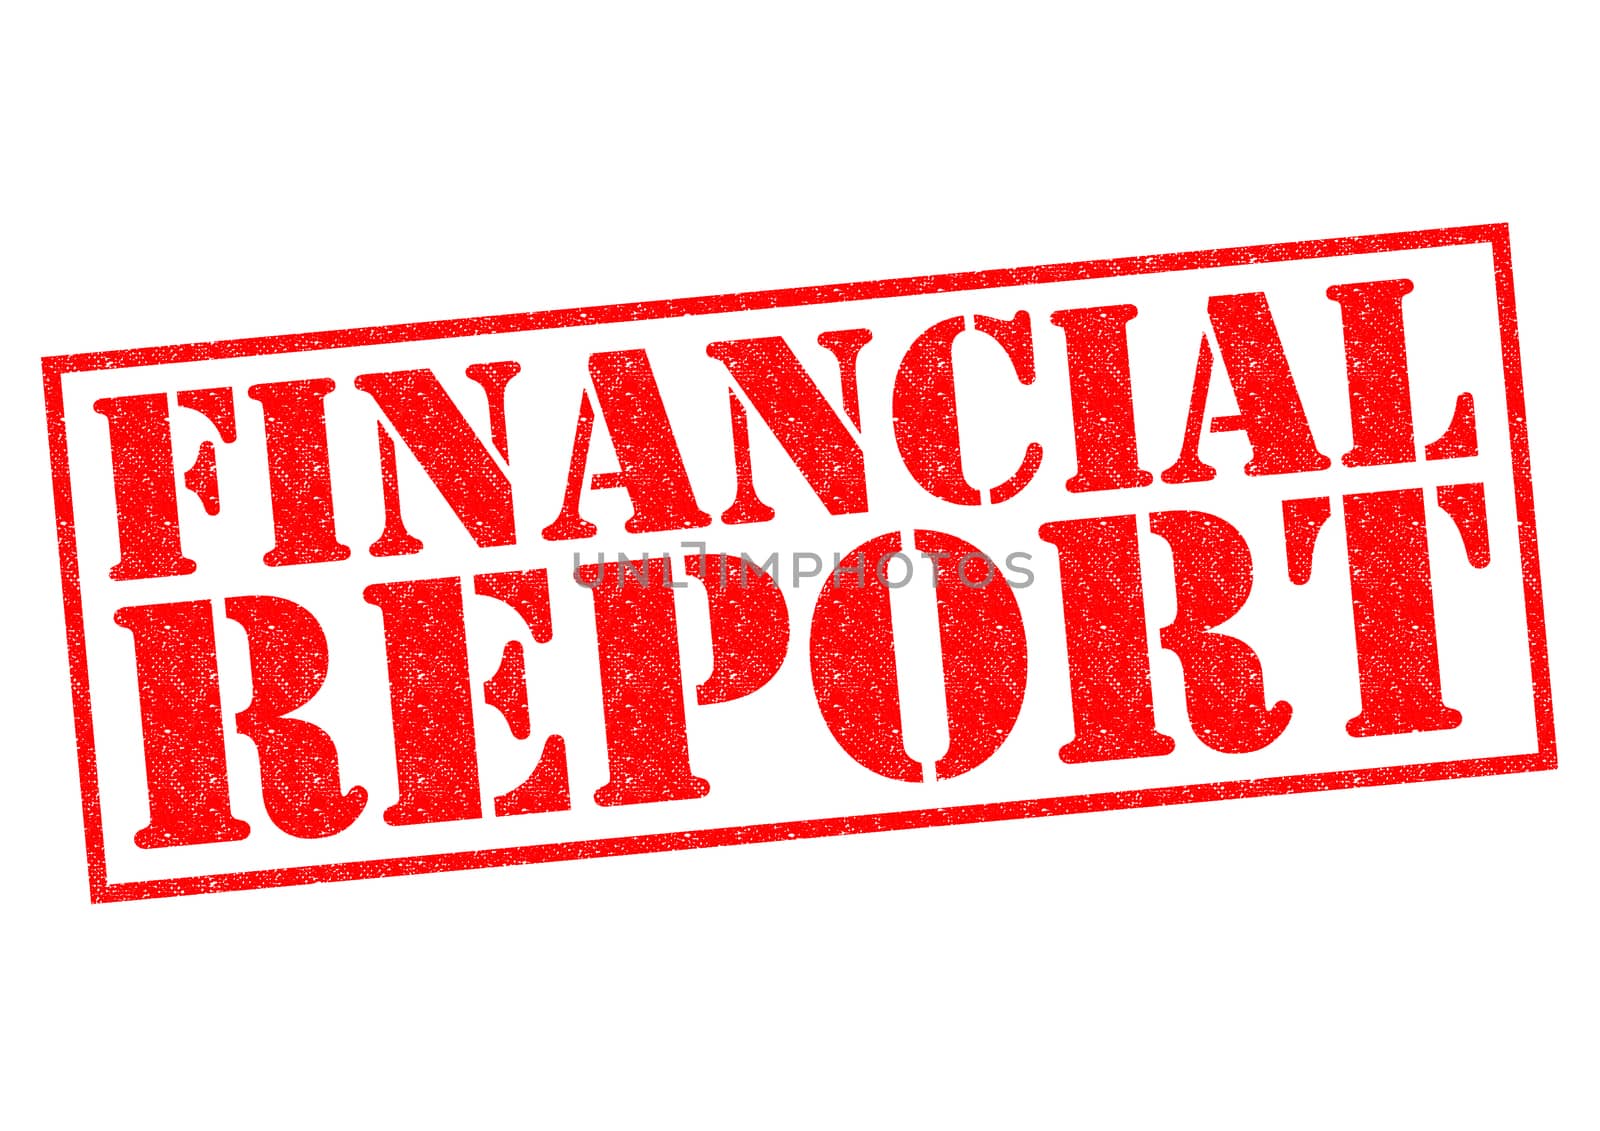 FINANCIAL REPORT by chrisdorney